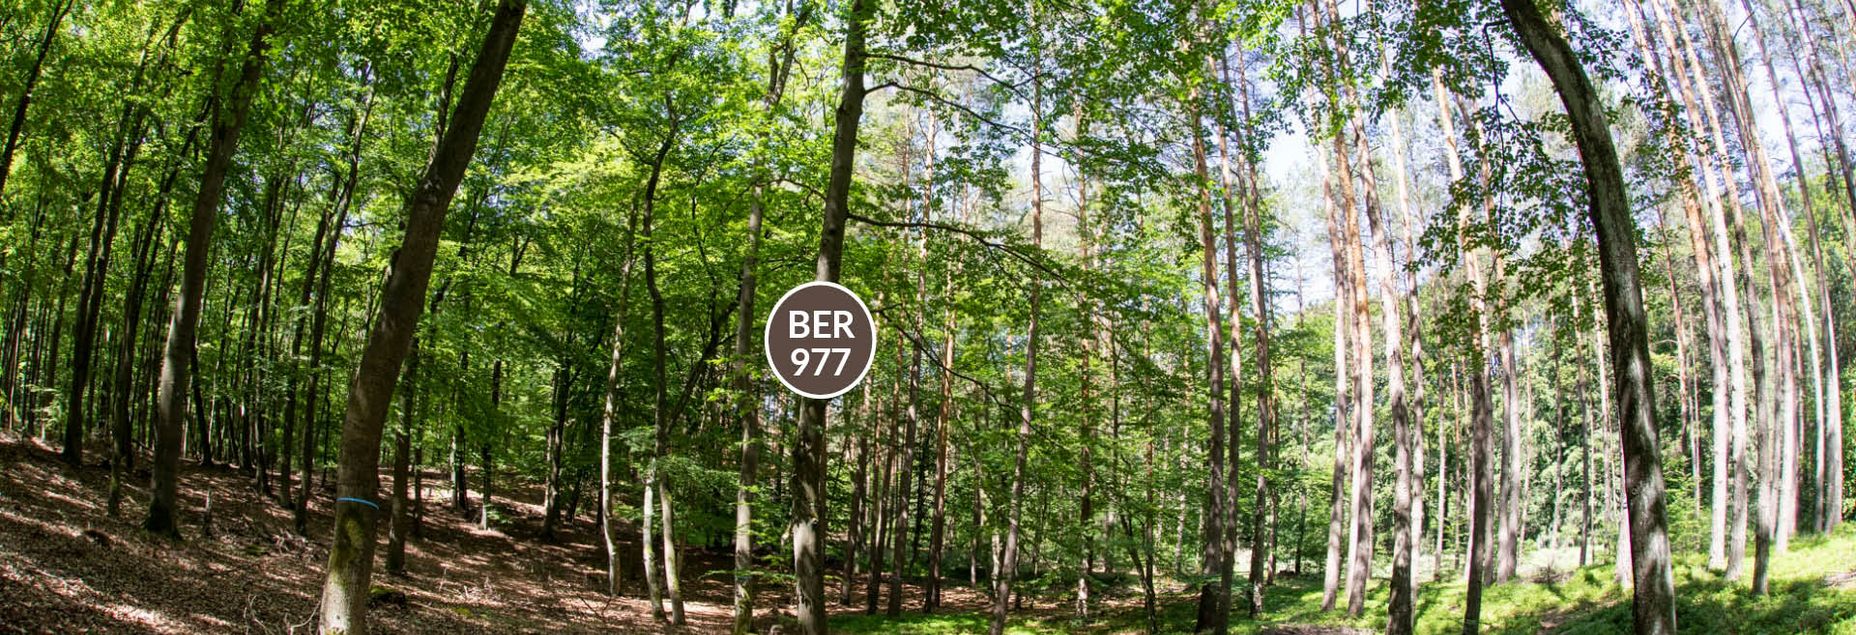 Baum BER 977 - Fisheyeperspektive